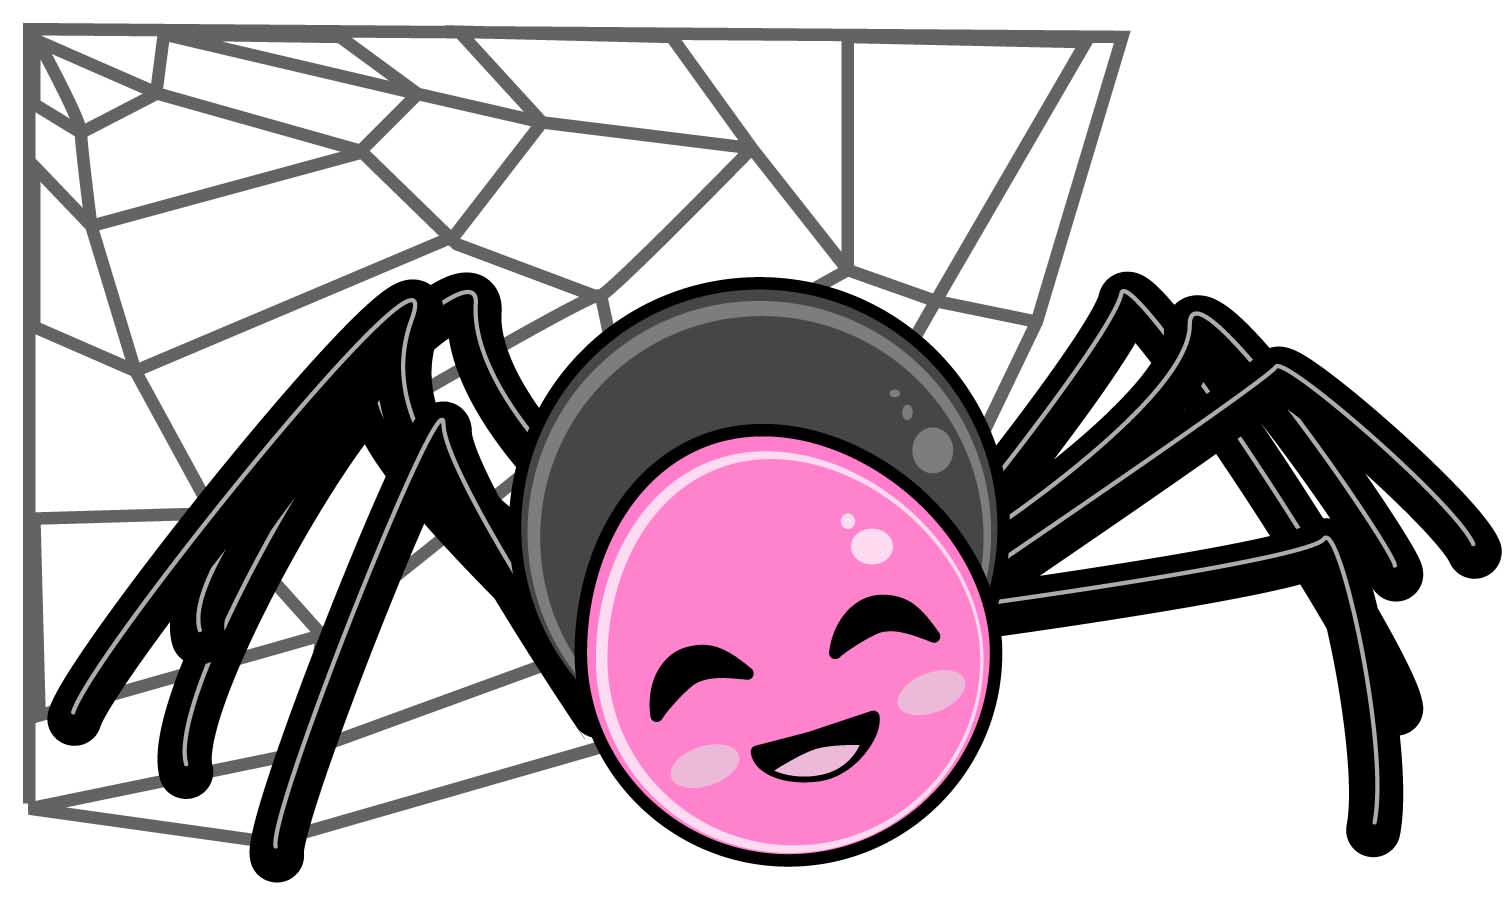 Spiders Cartoon